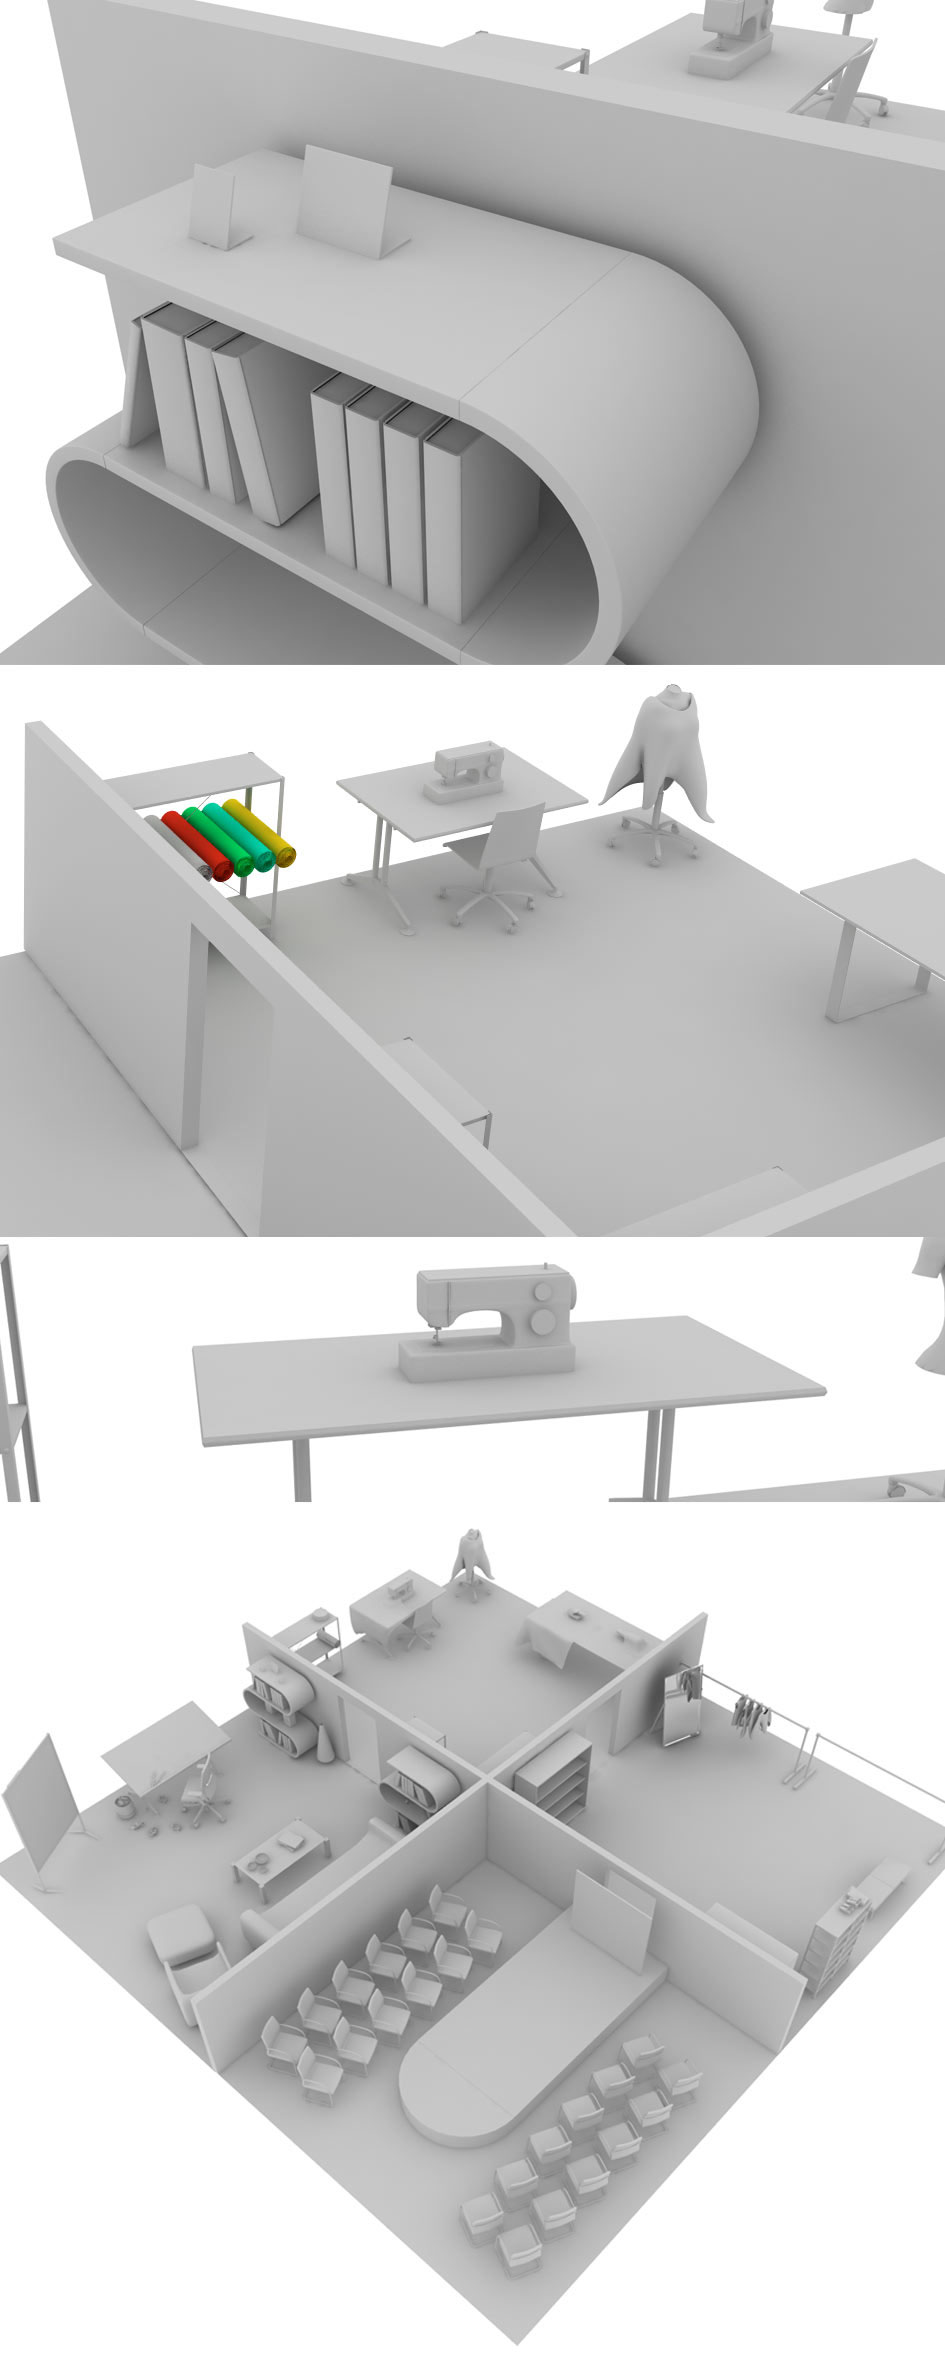 ad adver glass 3D Render c4d CGI cook draw box cloth design FINEART dijitalart modeling